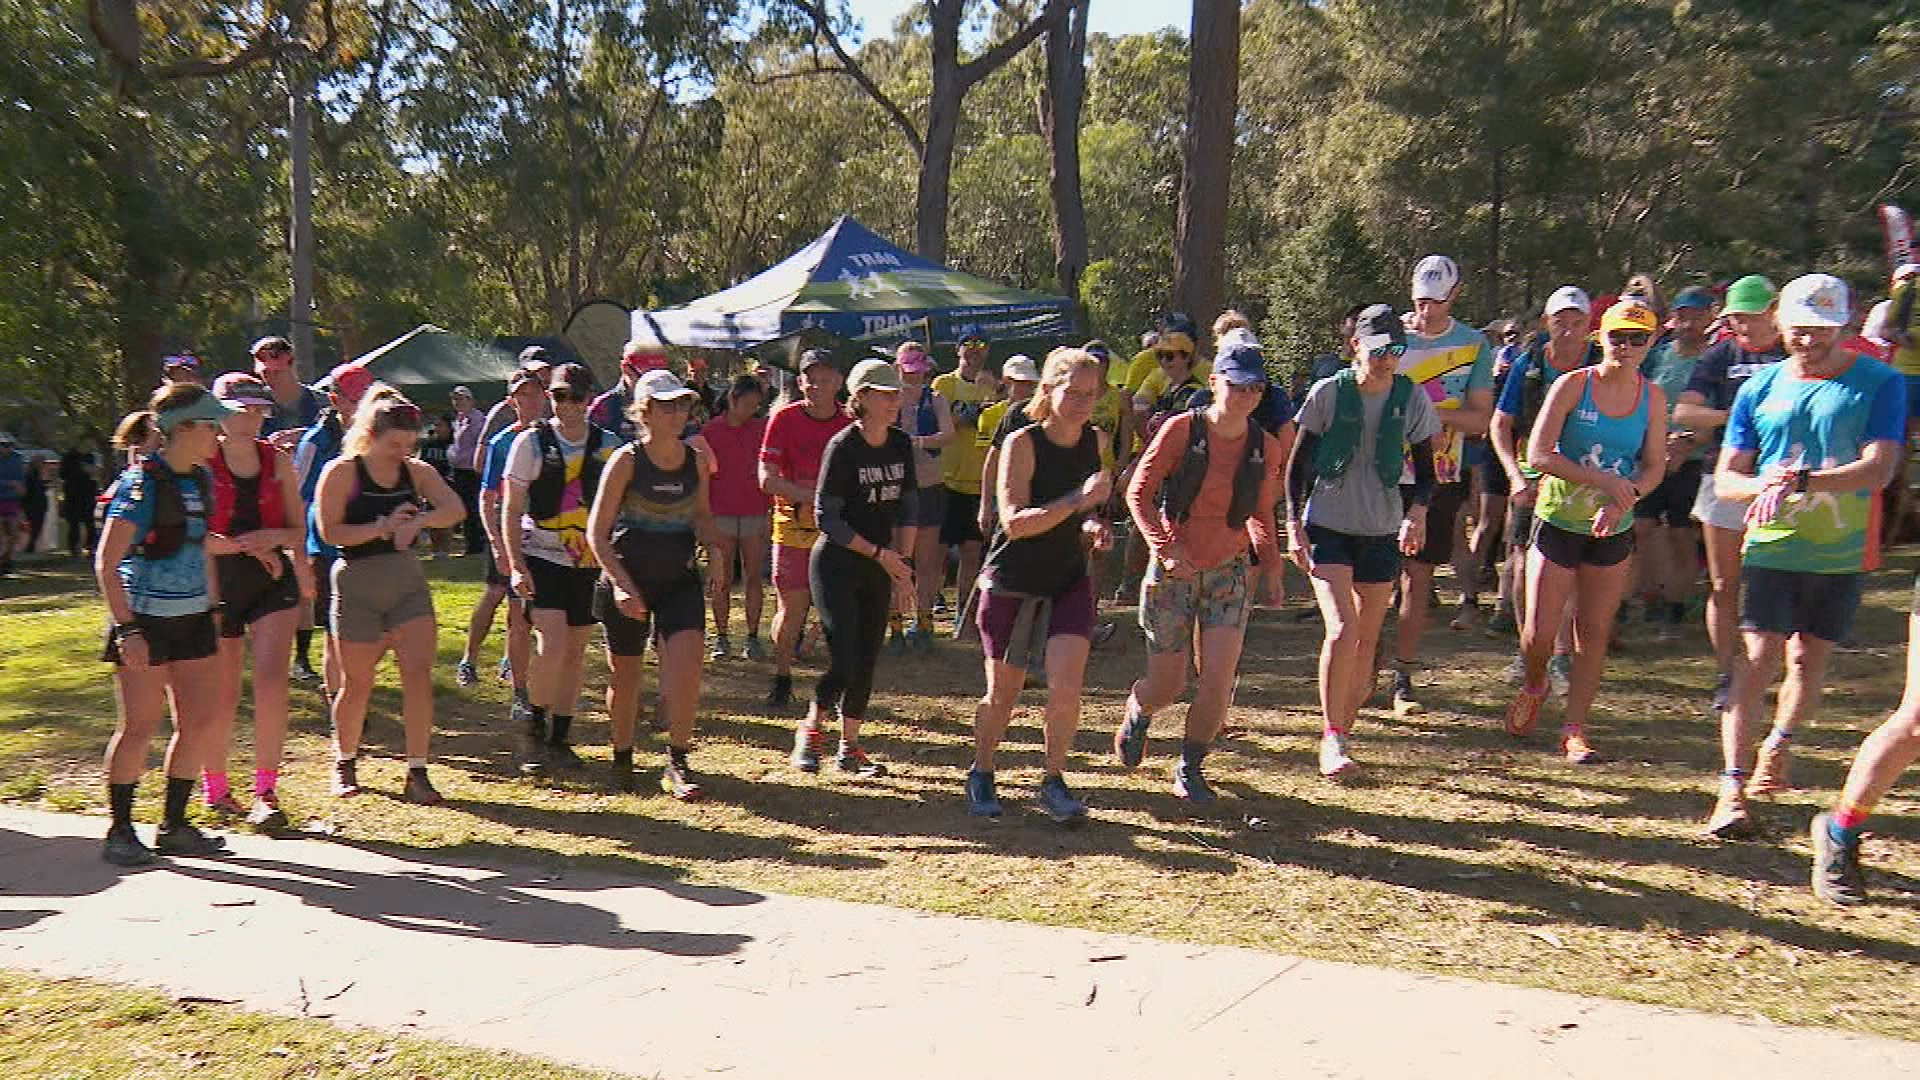 Runners 'reclaim' popular trail after attacks near Brisbane